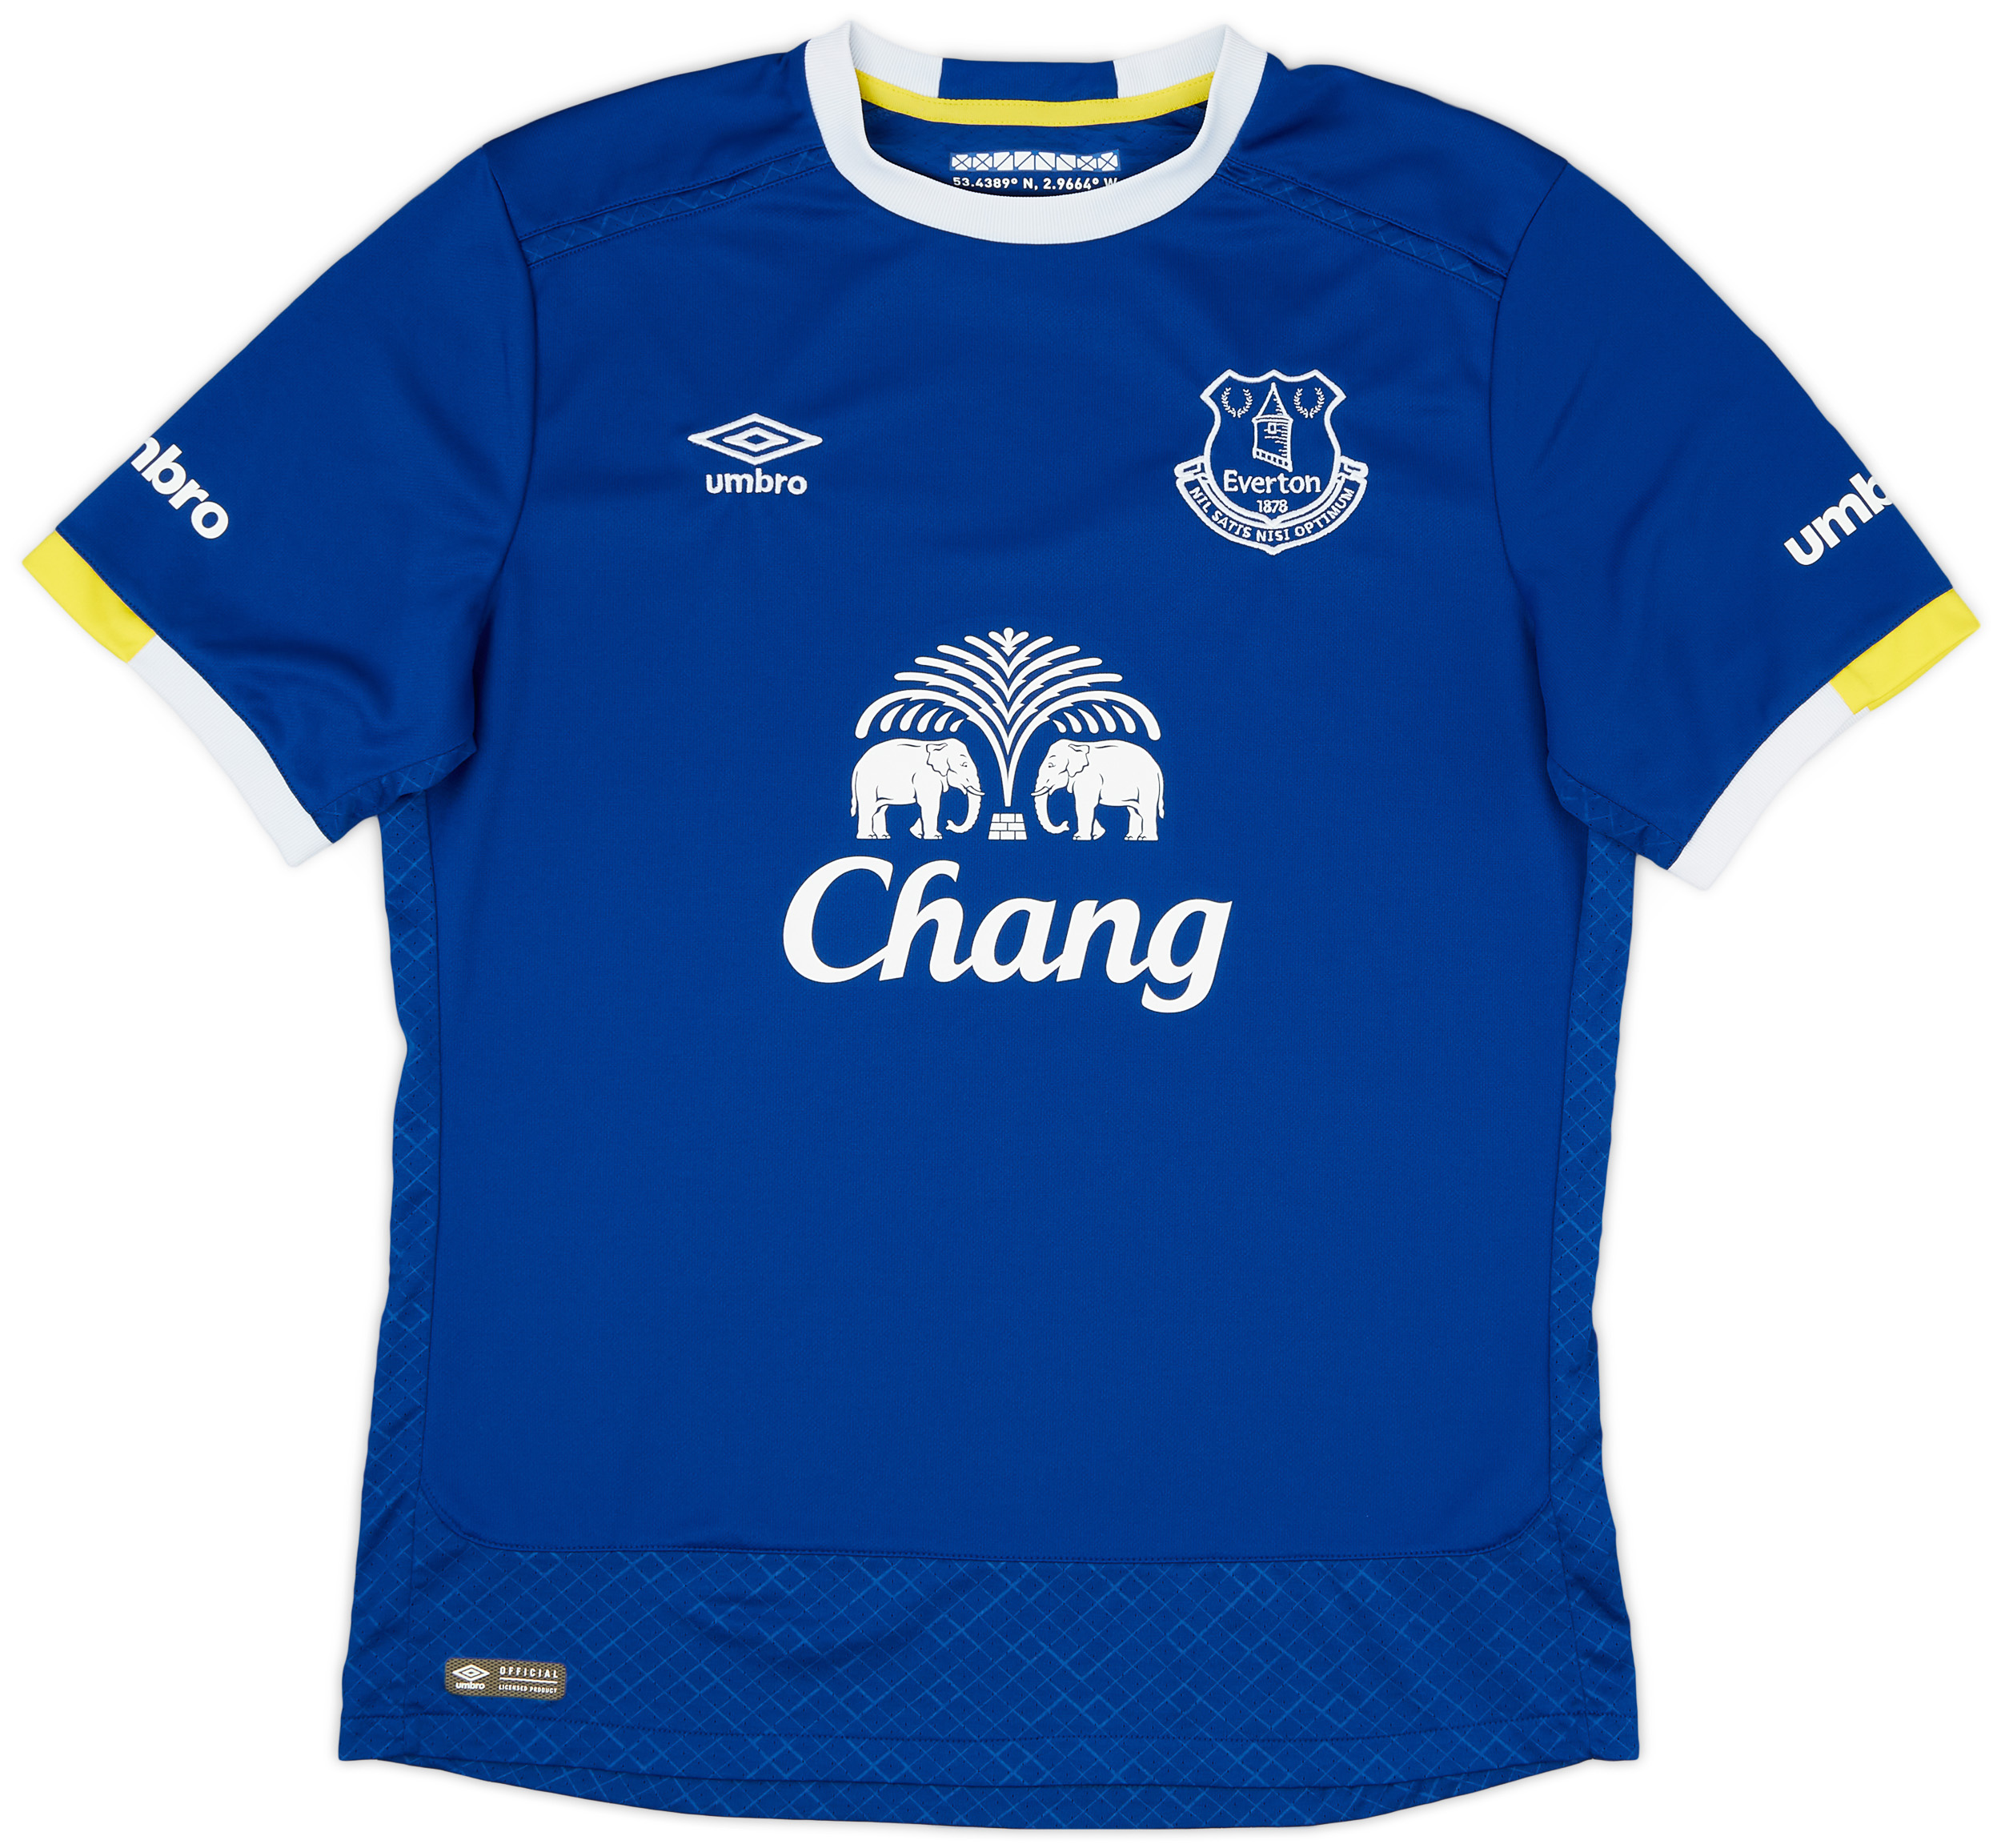 2016-17 Everton Home Shirt - 9/10 - ()